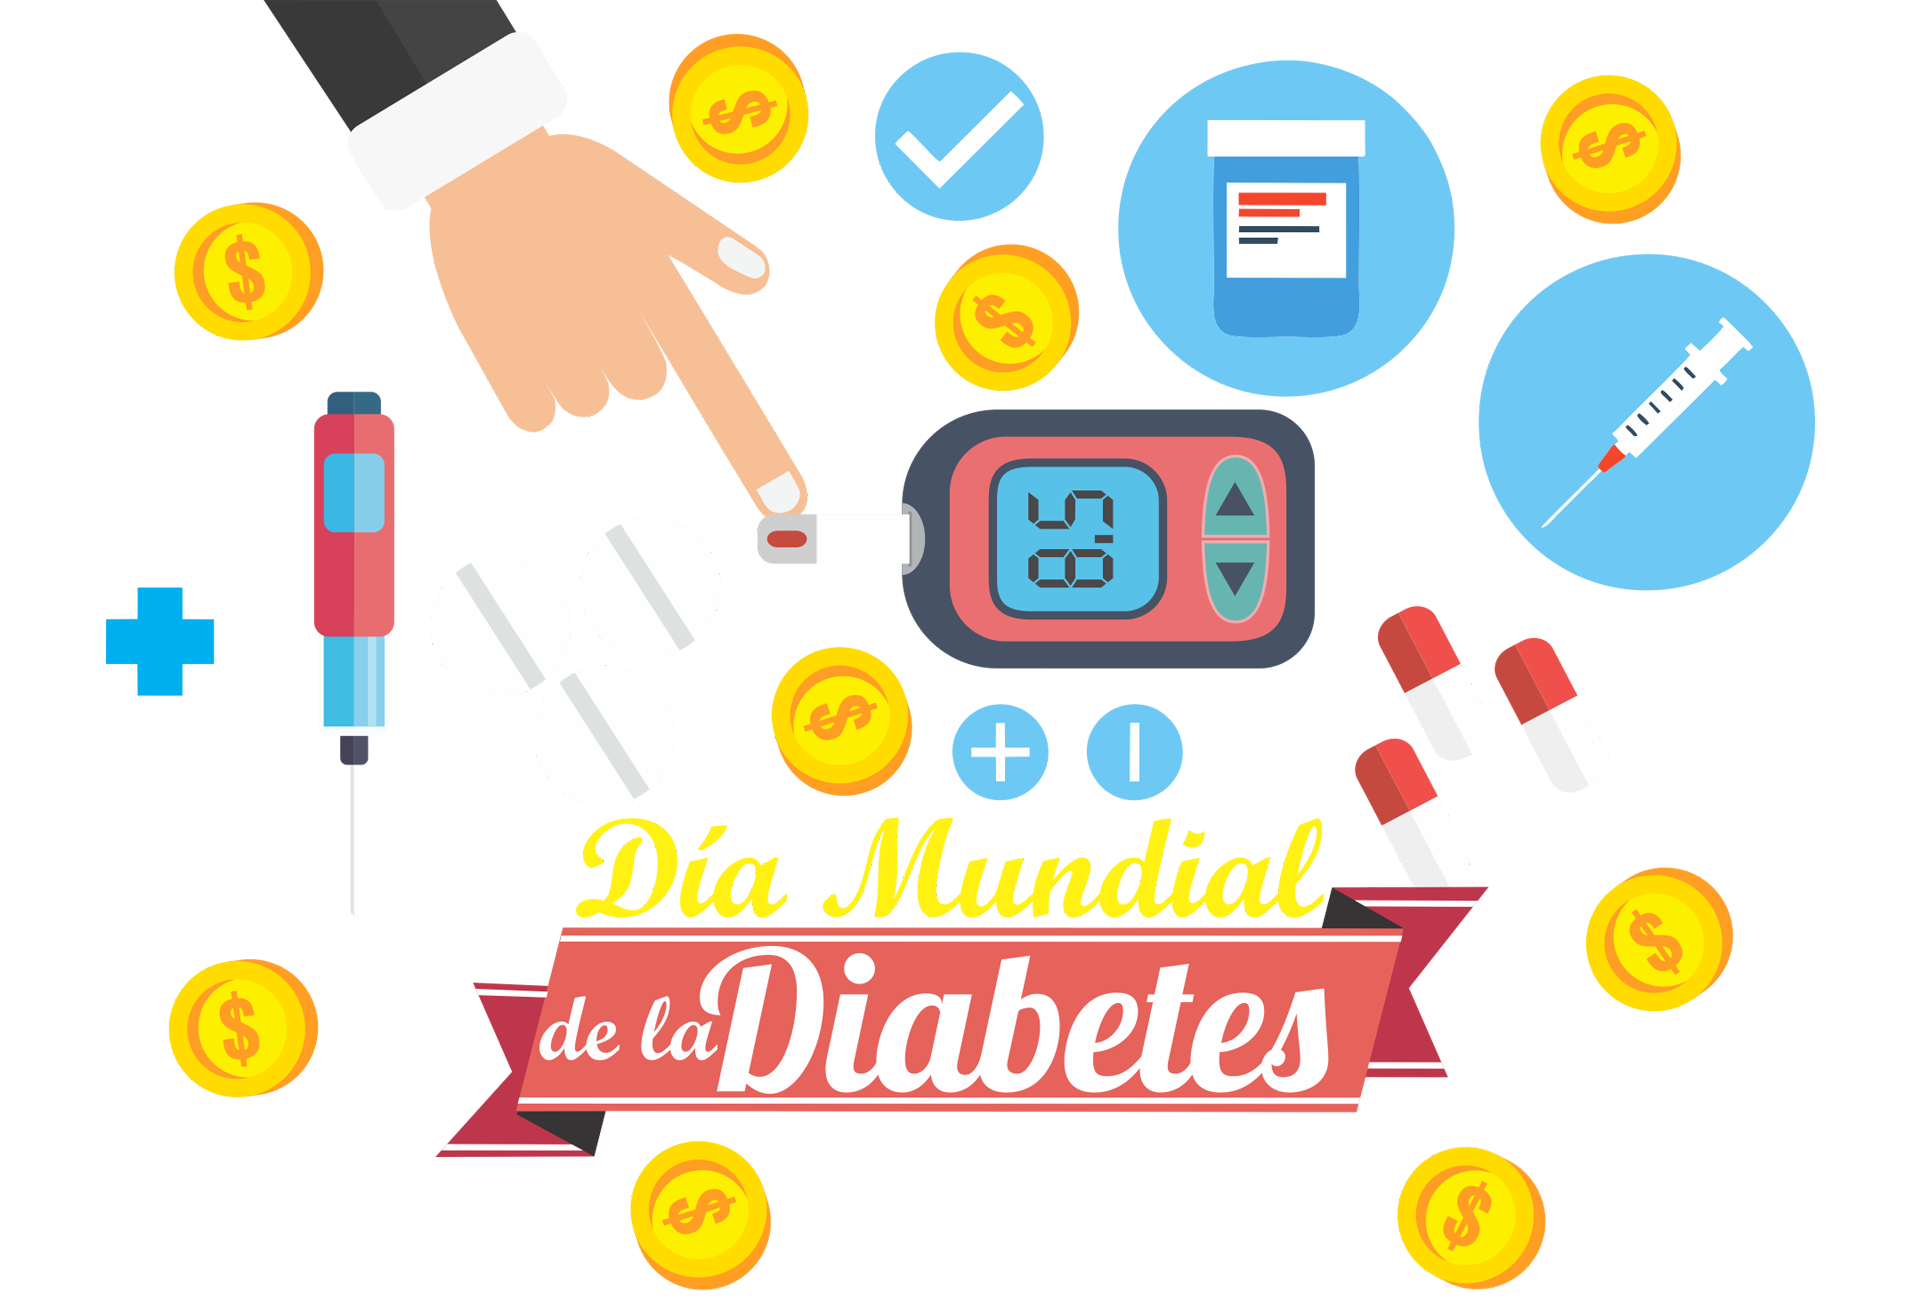 diabetes livebetes